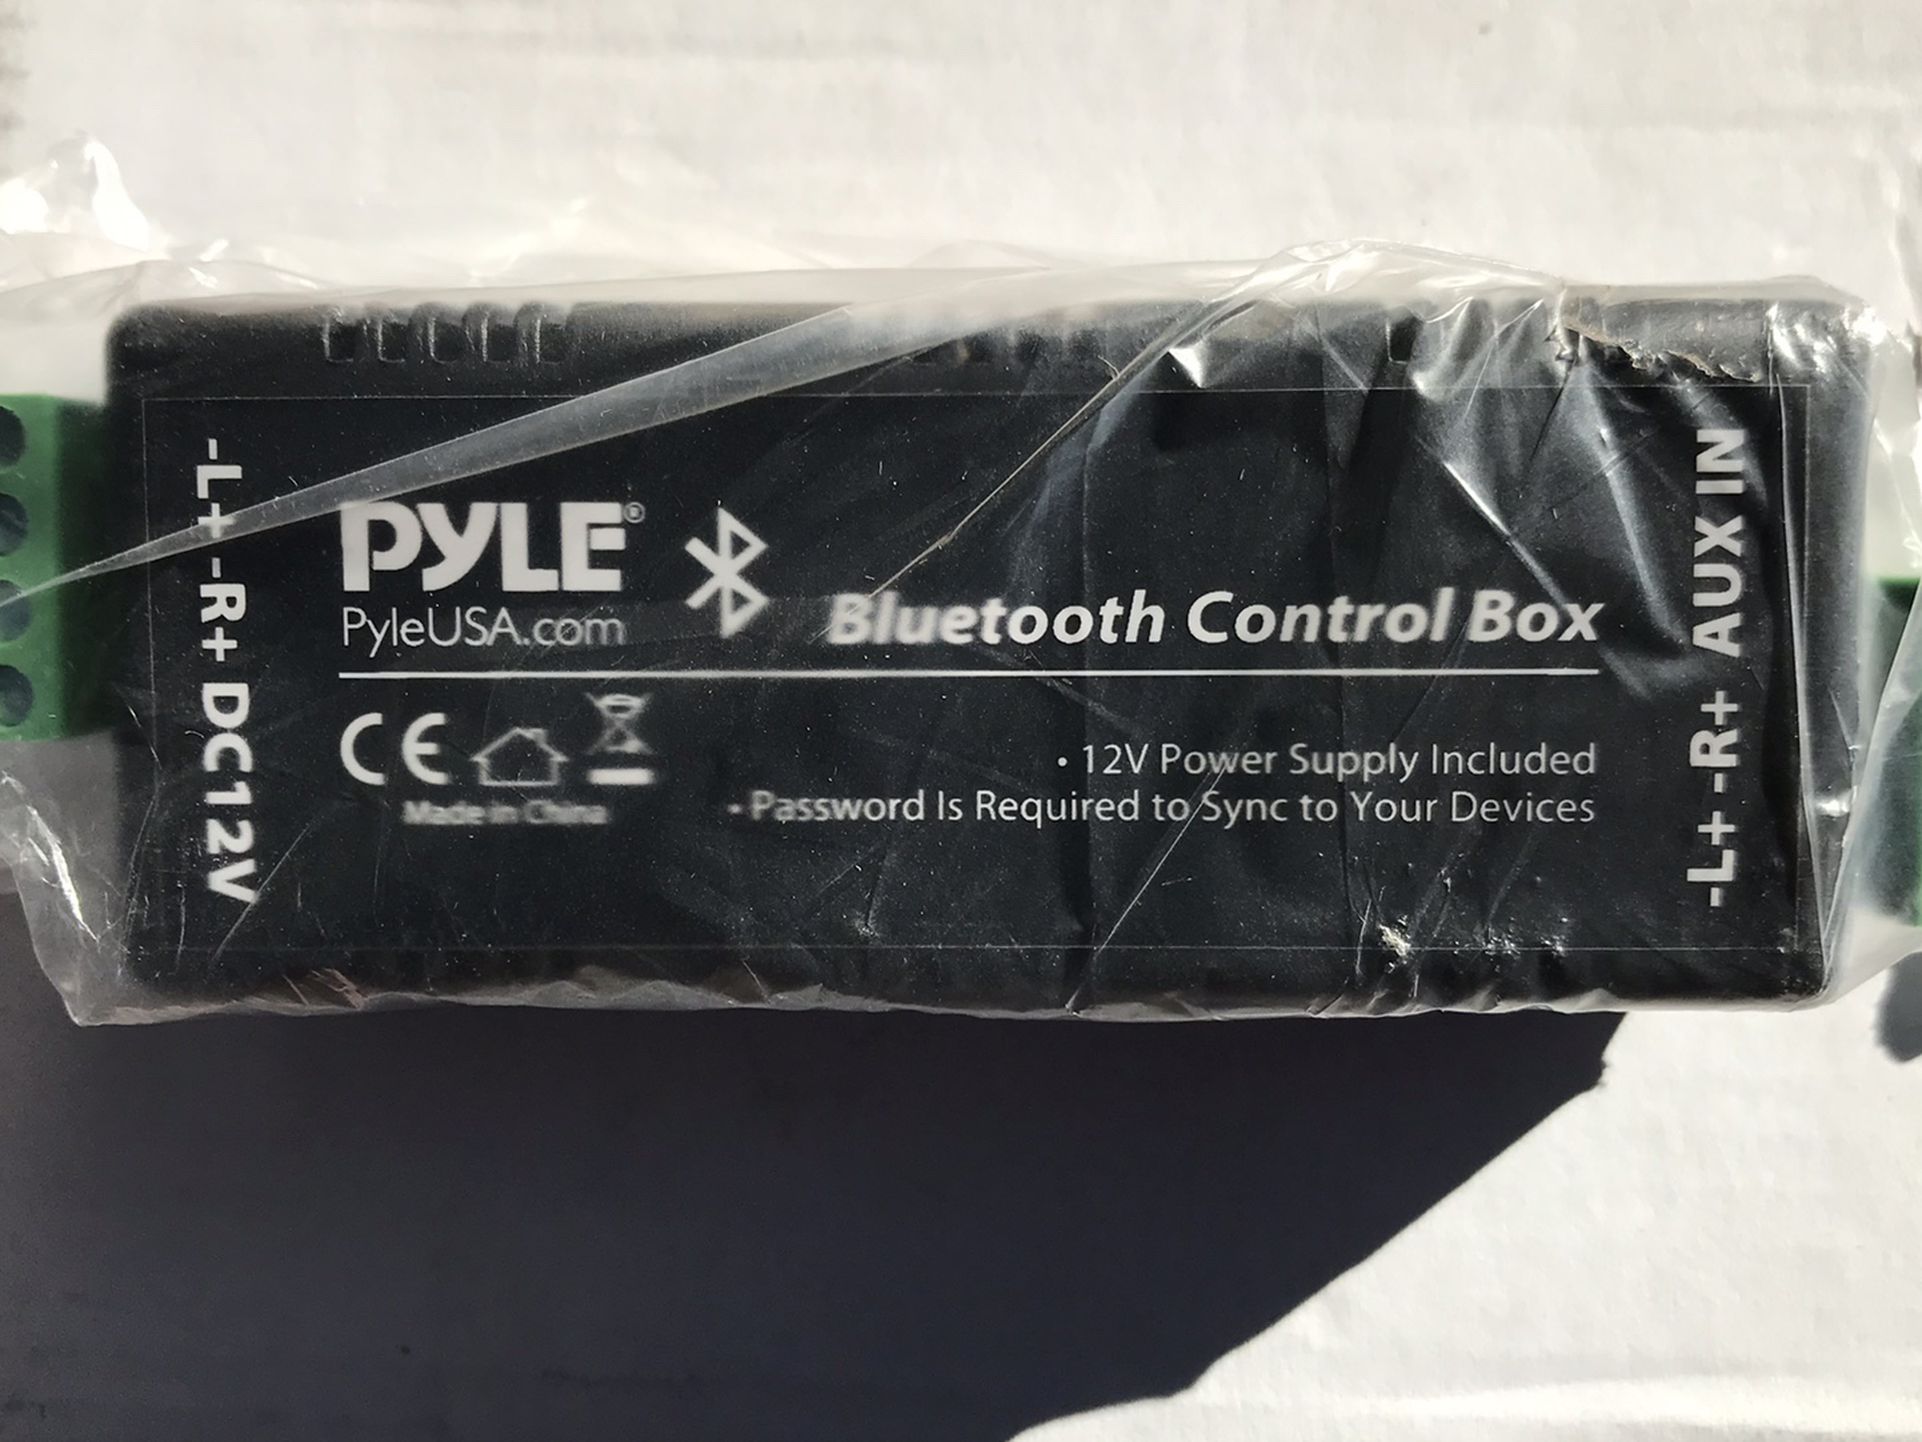 Pyle Bluetooth Control Box